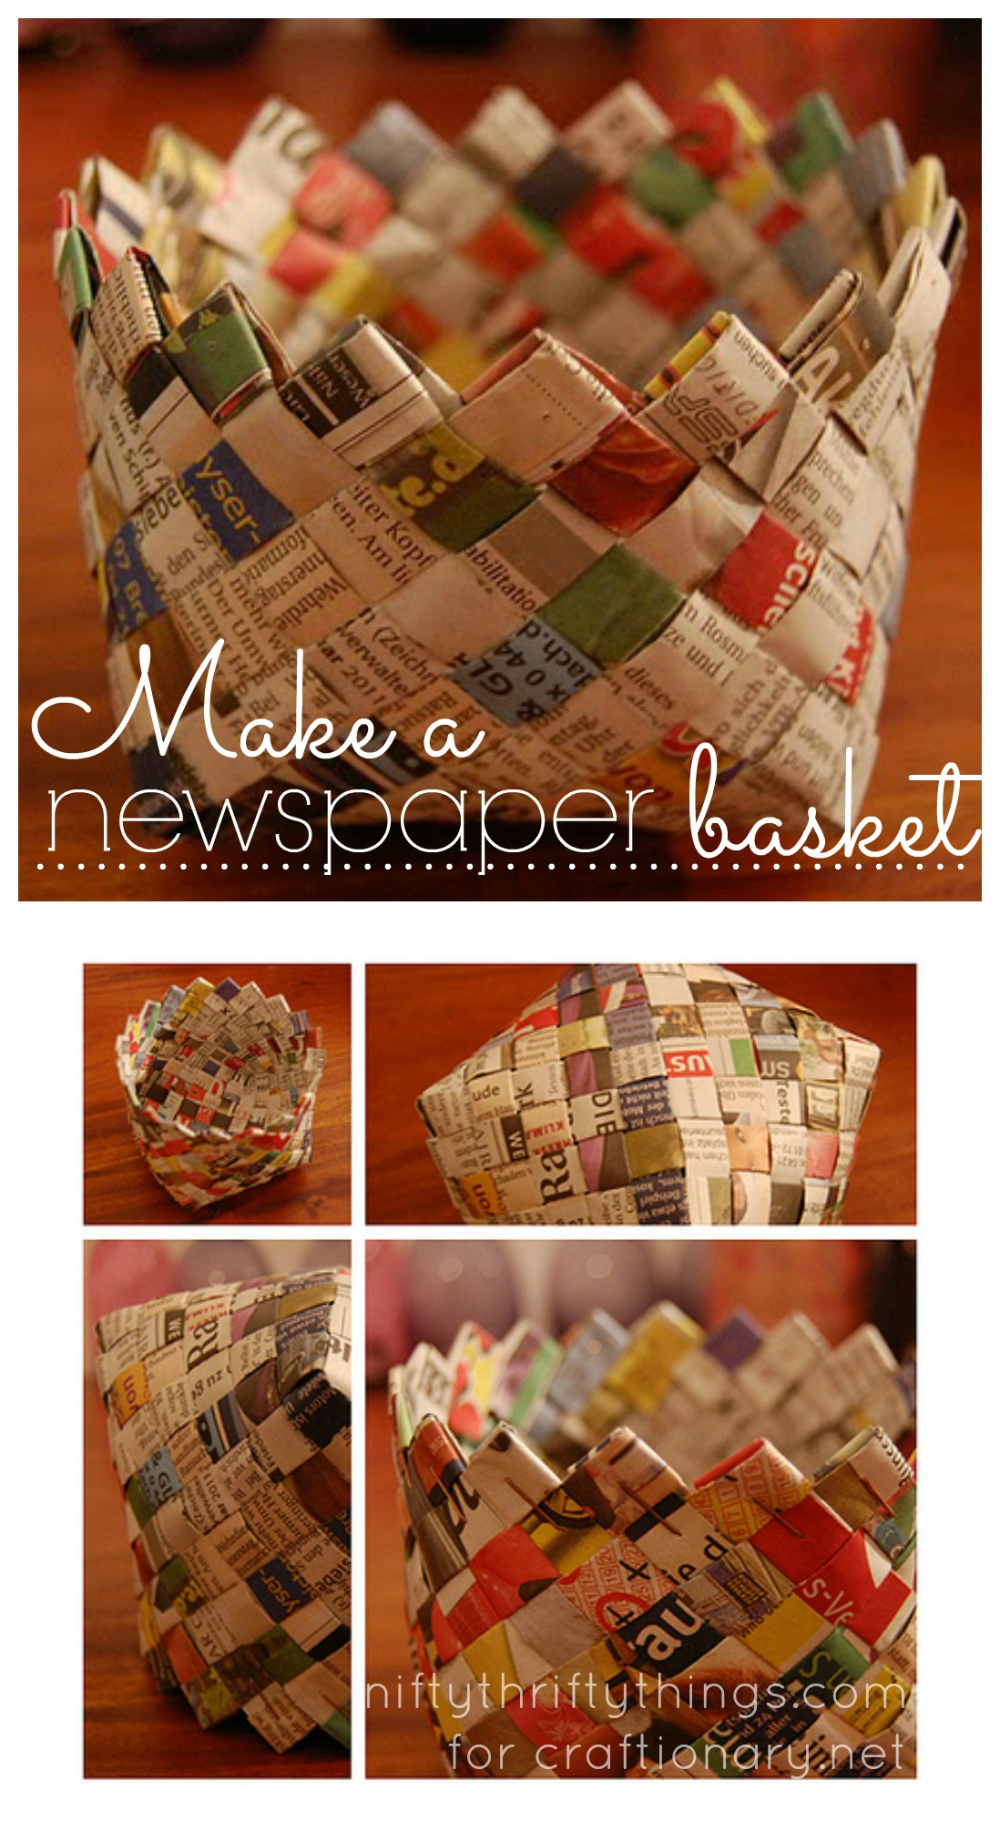 18 diy Paper basket ideas